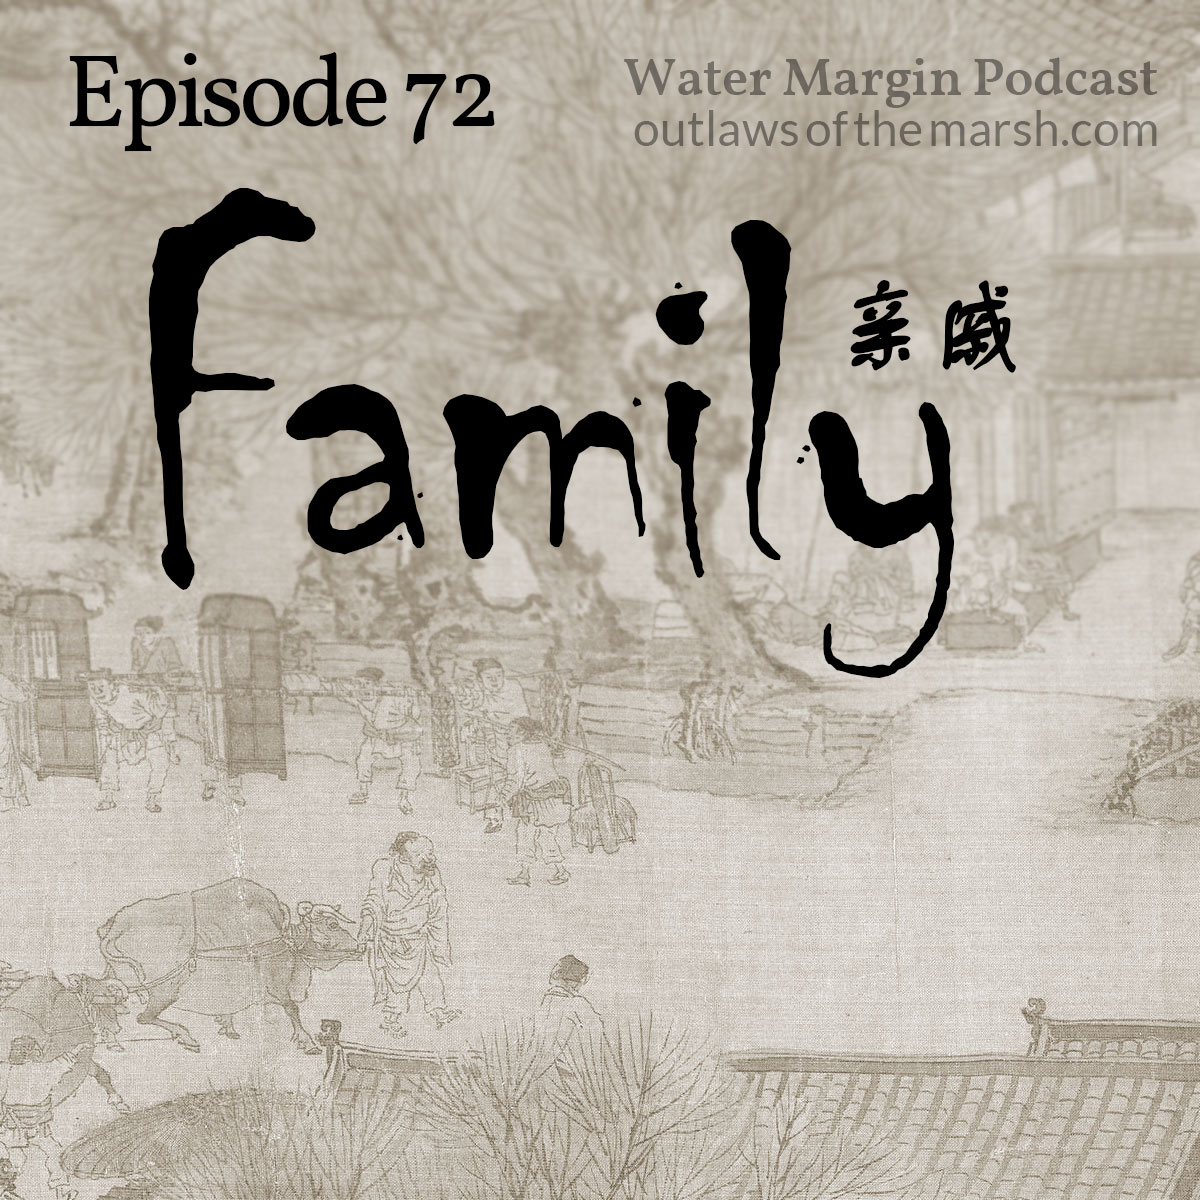 Water Margin Podcast: Episode 072